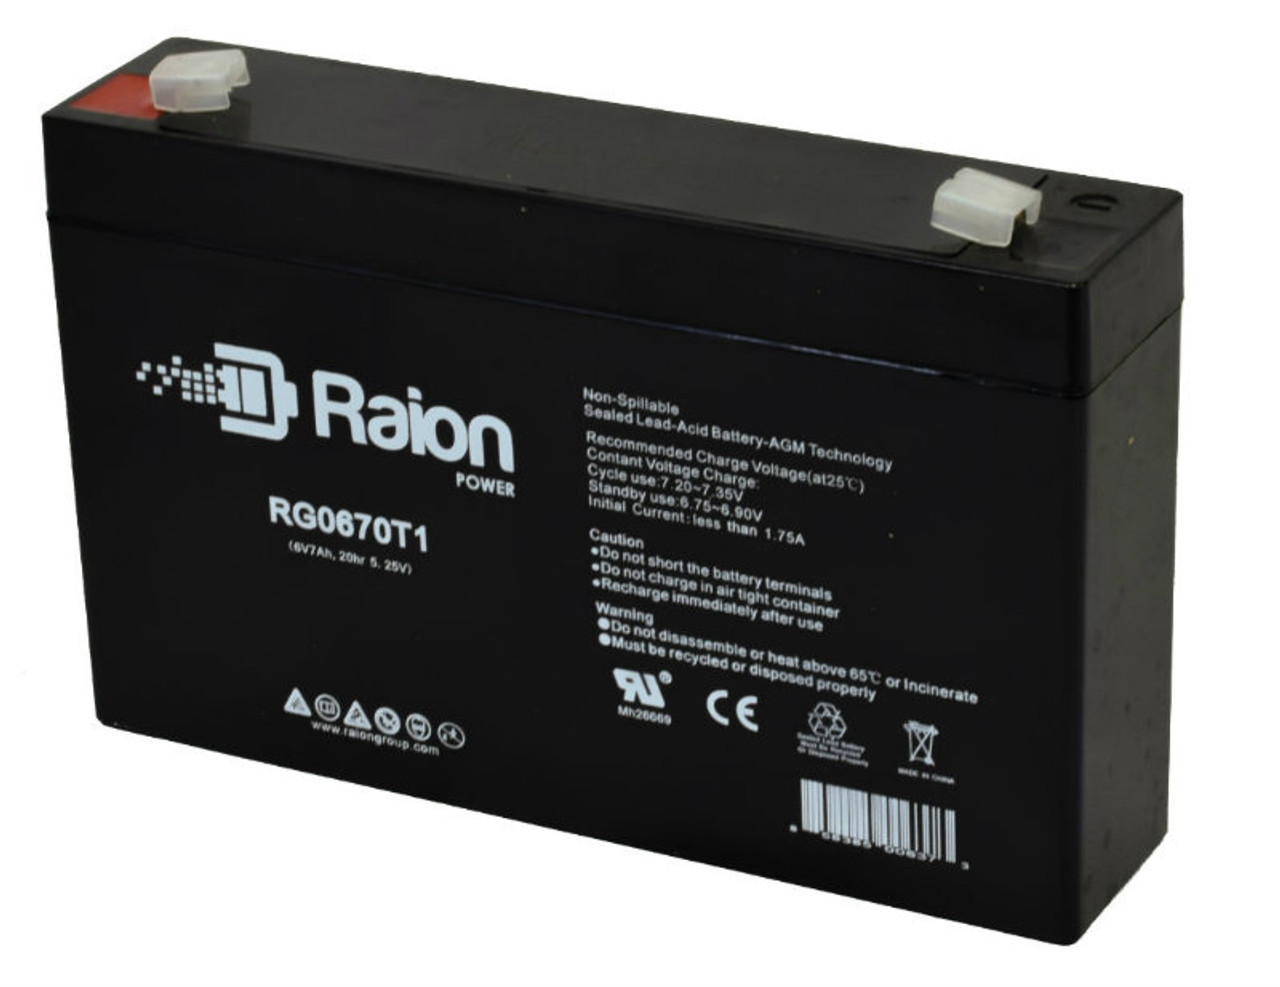 Raion Power RG0670T1 6V 7Ah Replacement Battery Cartridge for Pace Tech Inc. 911 MINIPACK ECG MONITOR Medical Equipment